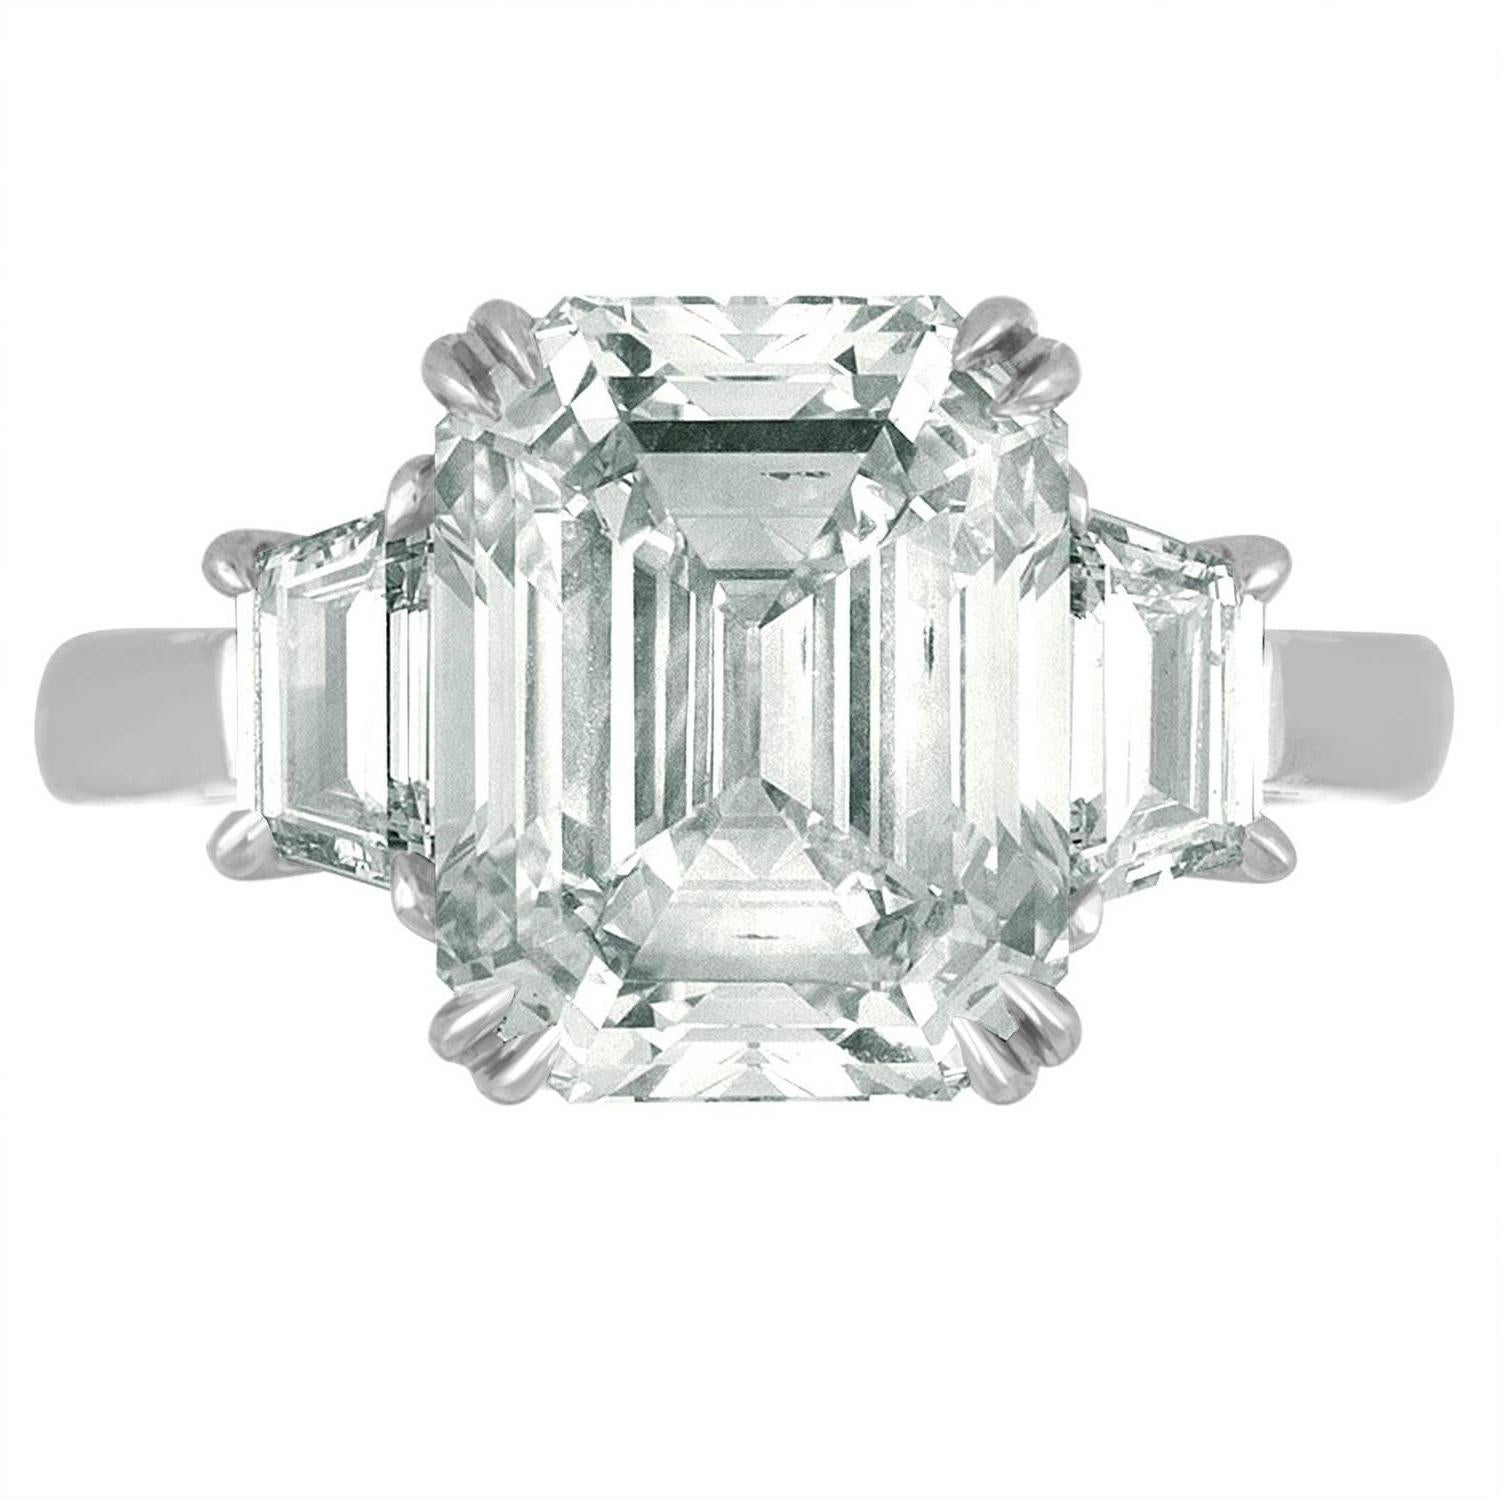 6.02 Carat Emerald Cut Diamond Set in Platinum with Trapezoids 2